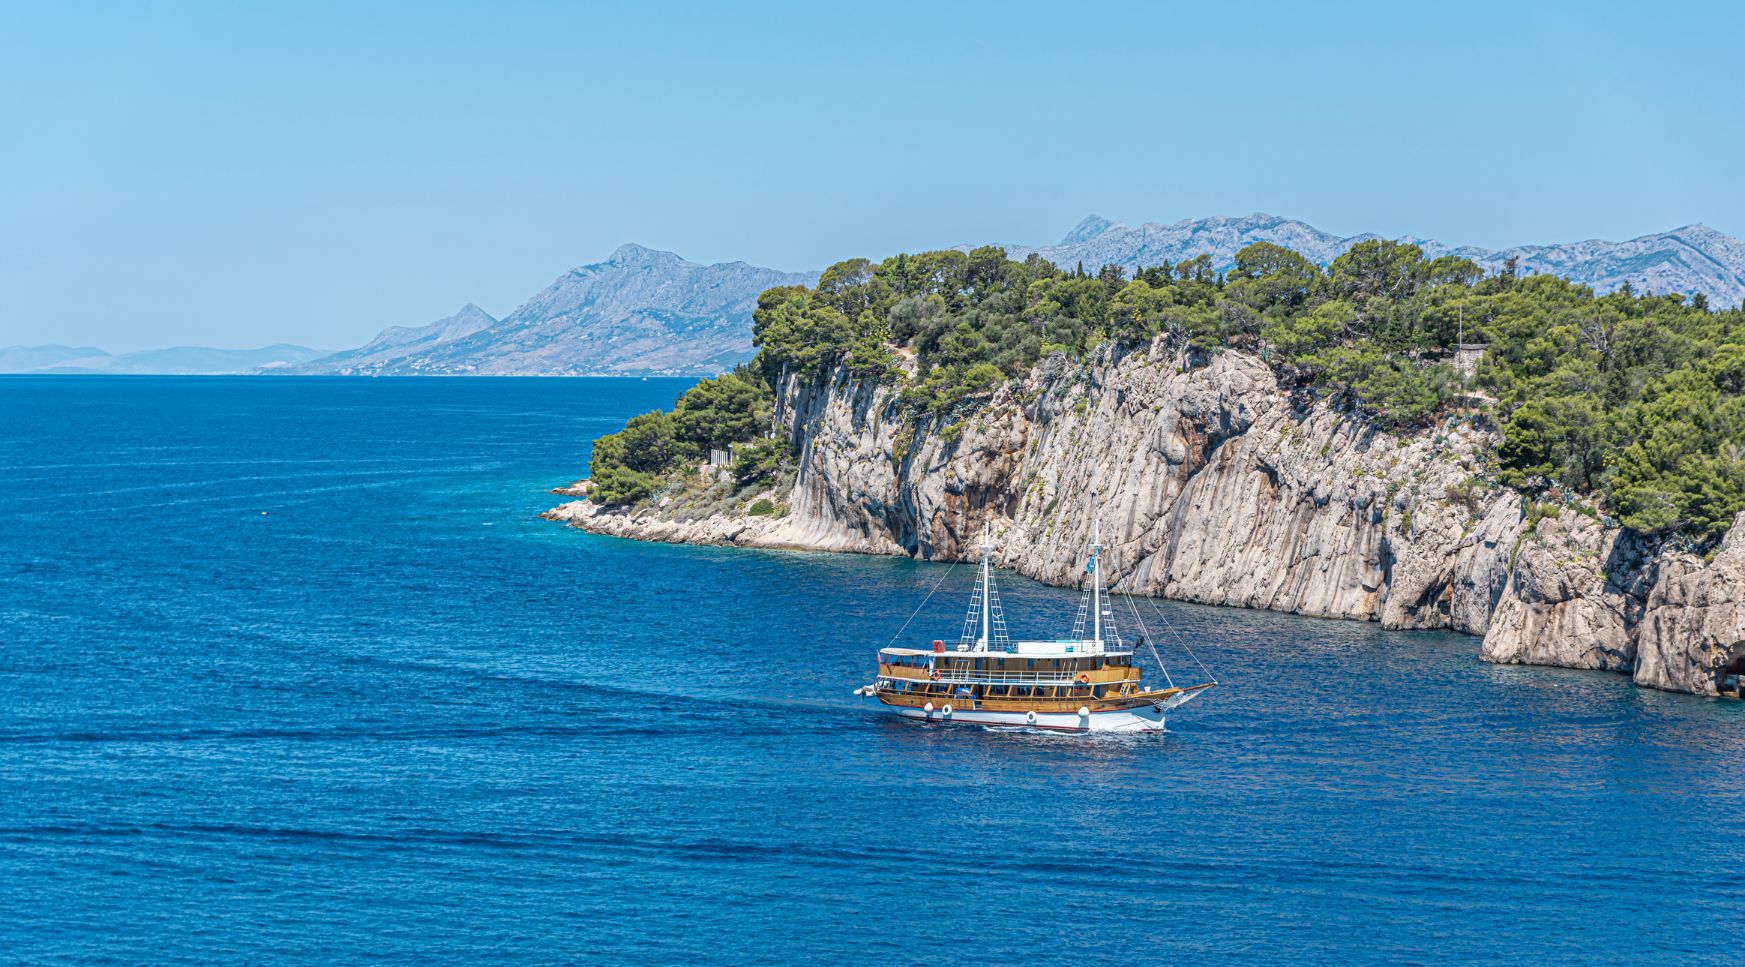 A ship sails across a rocky bay of the Adriatic Sea, on the coast of Croatia